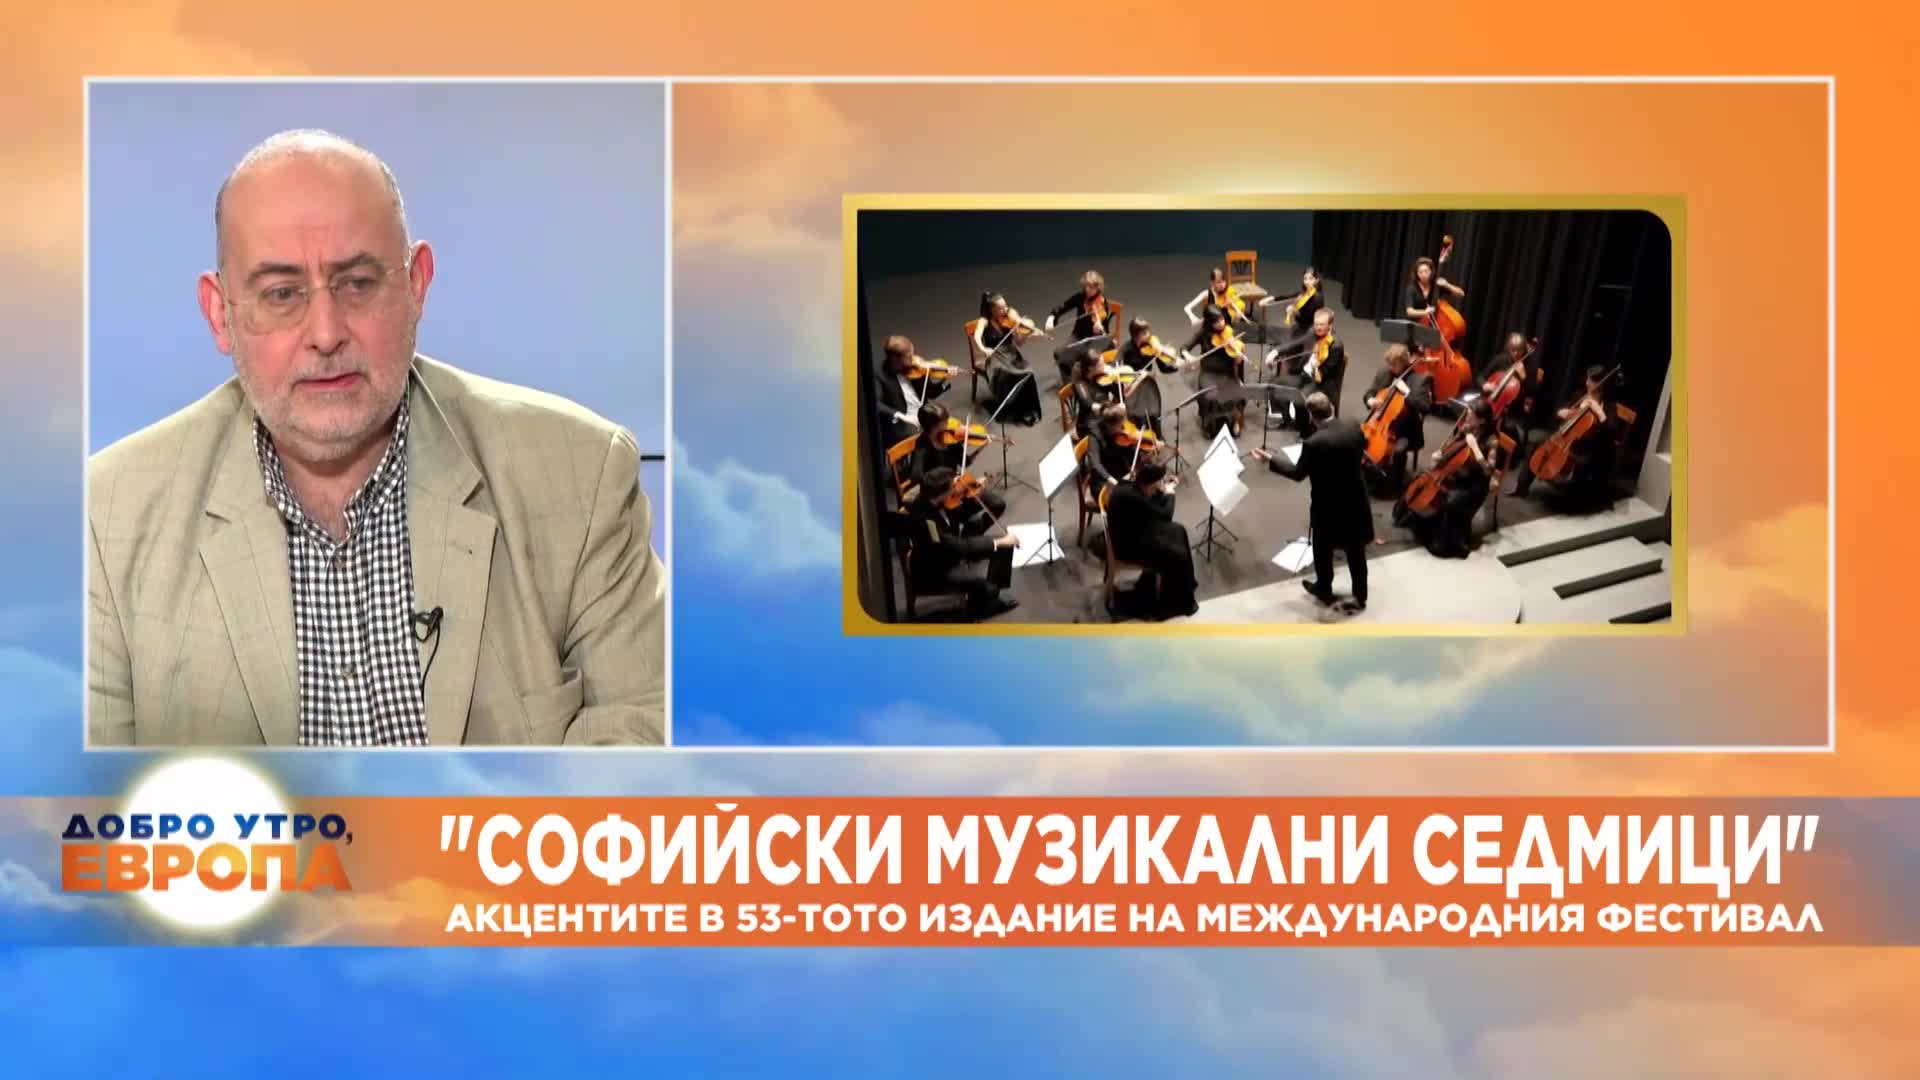 Интервю с проф. Момчил Георгиев - акцентите от "Софийски музикални седмици".